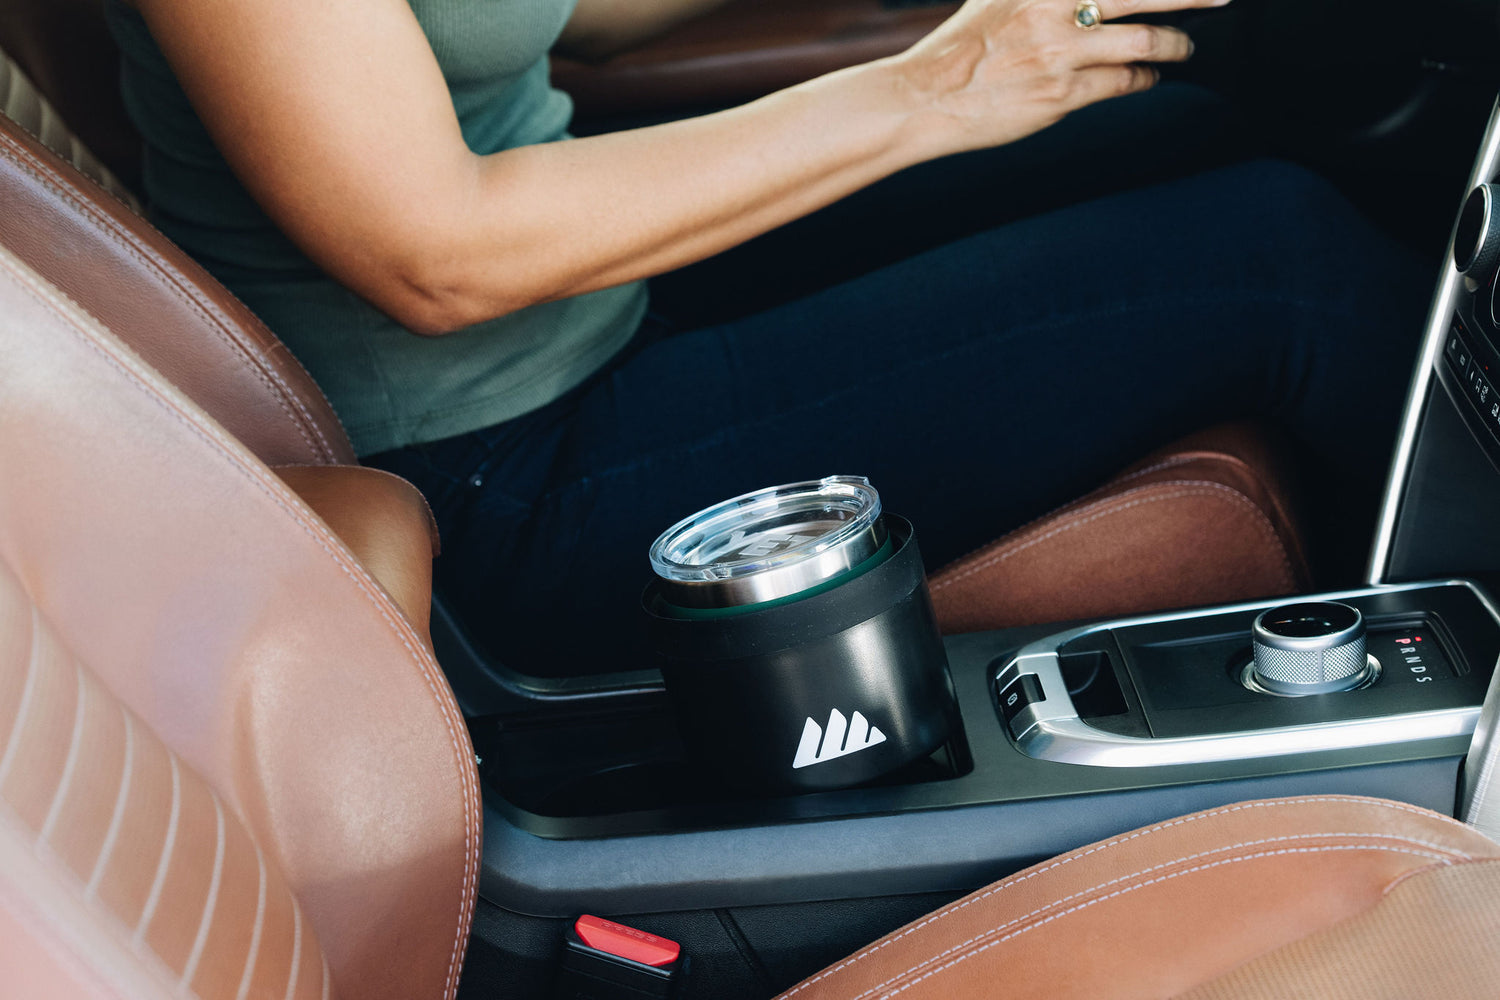 Integral Ultimate Expander Car Cup Holder Adjustable Base Expander & Organizer for Vehicles Compatible w/ Coffee Mug, Yeti 14/24/36/46oz